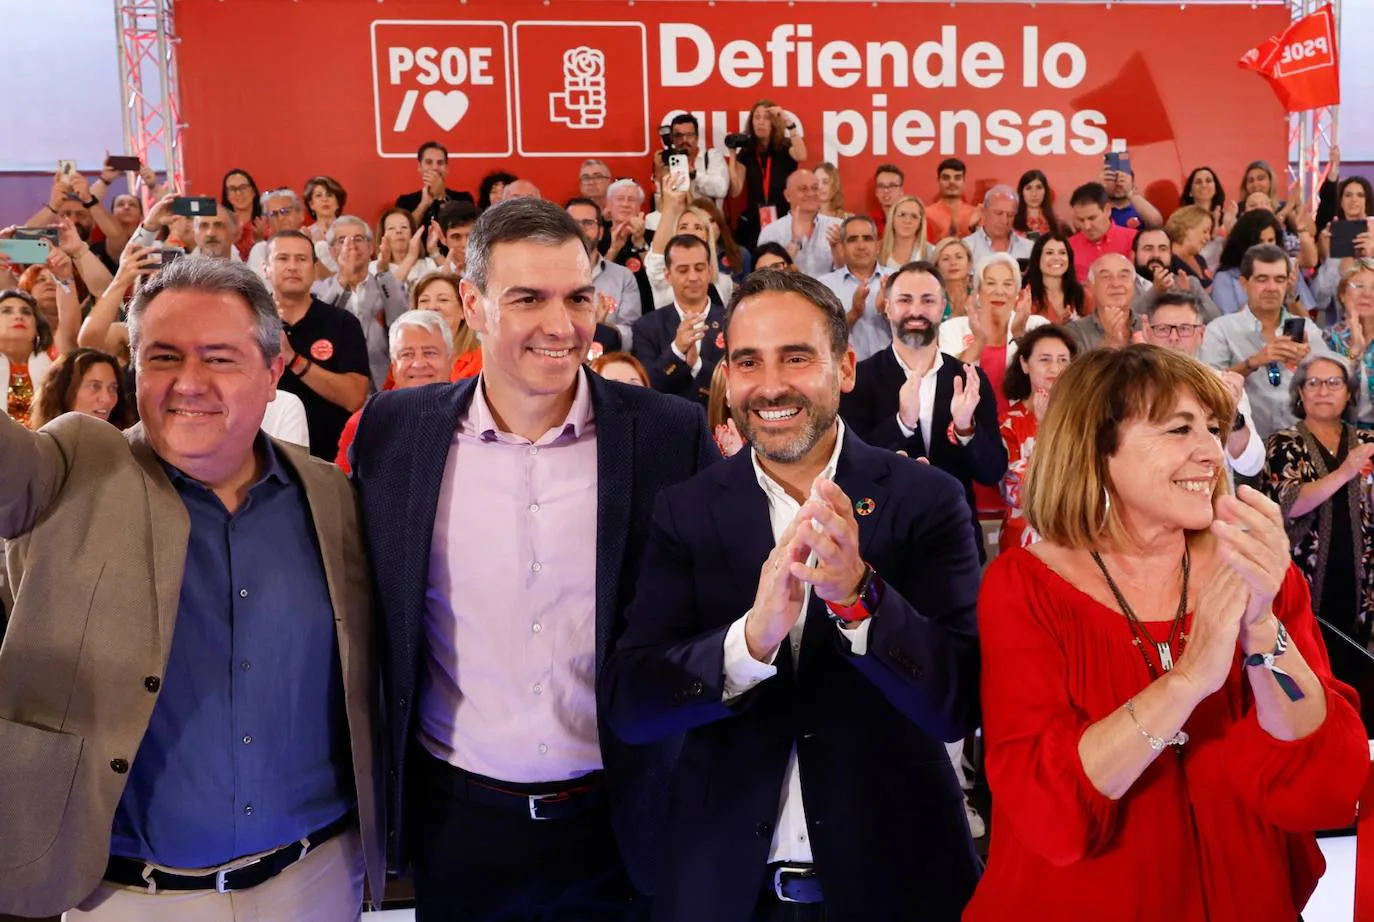 Spanish PM Pedro Sánchez in Malaga ahead of municipal elections